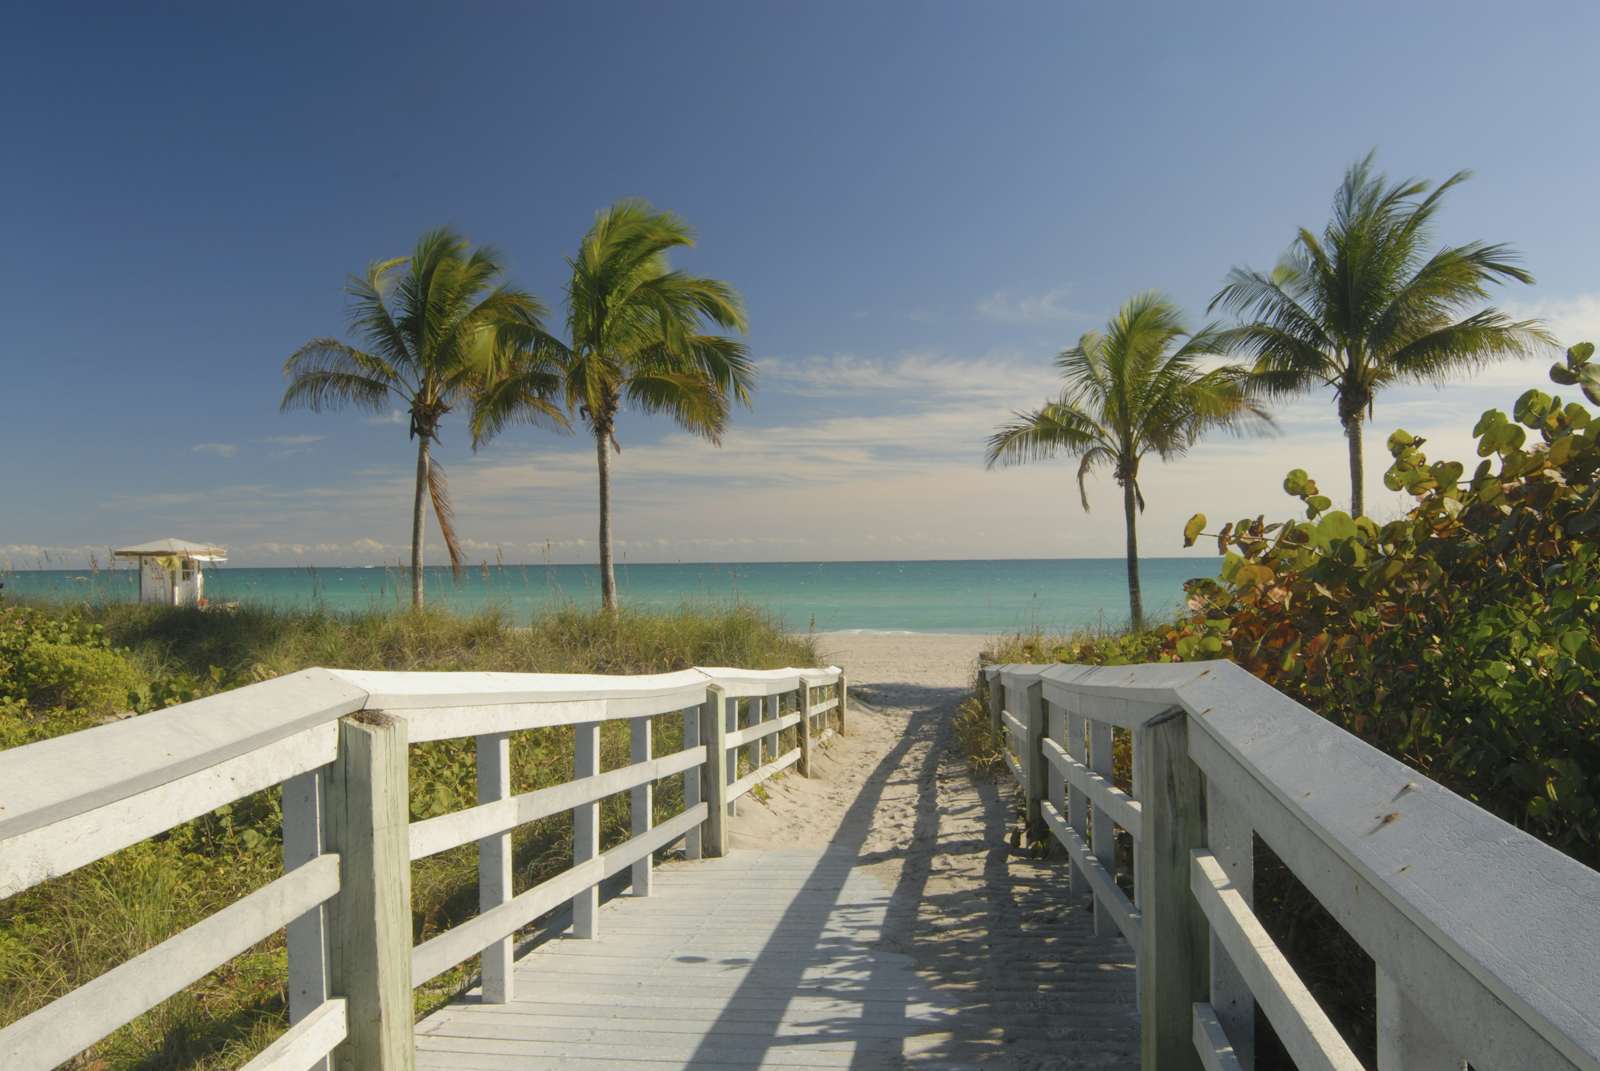 Boardwalk to a Florida beach